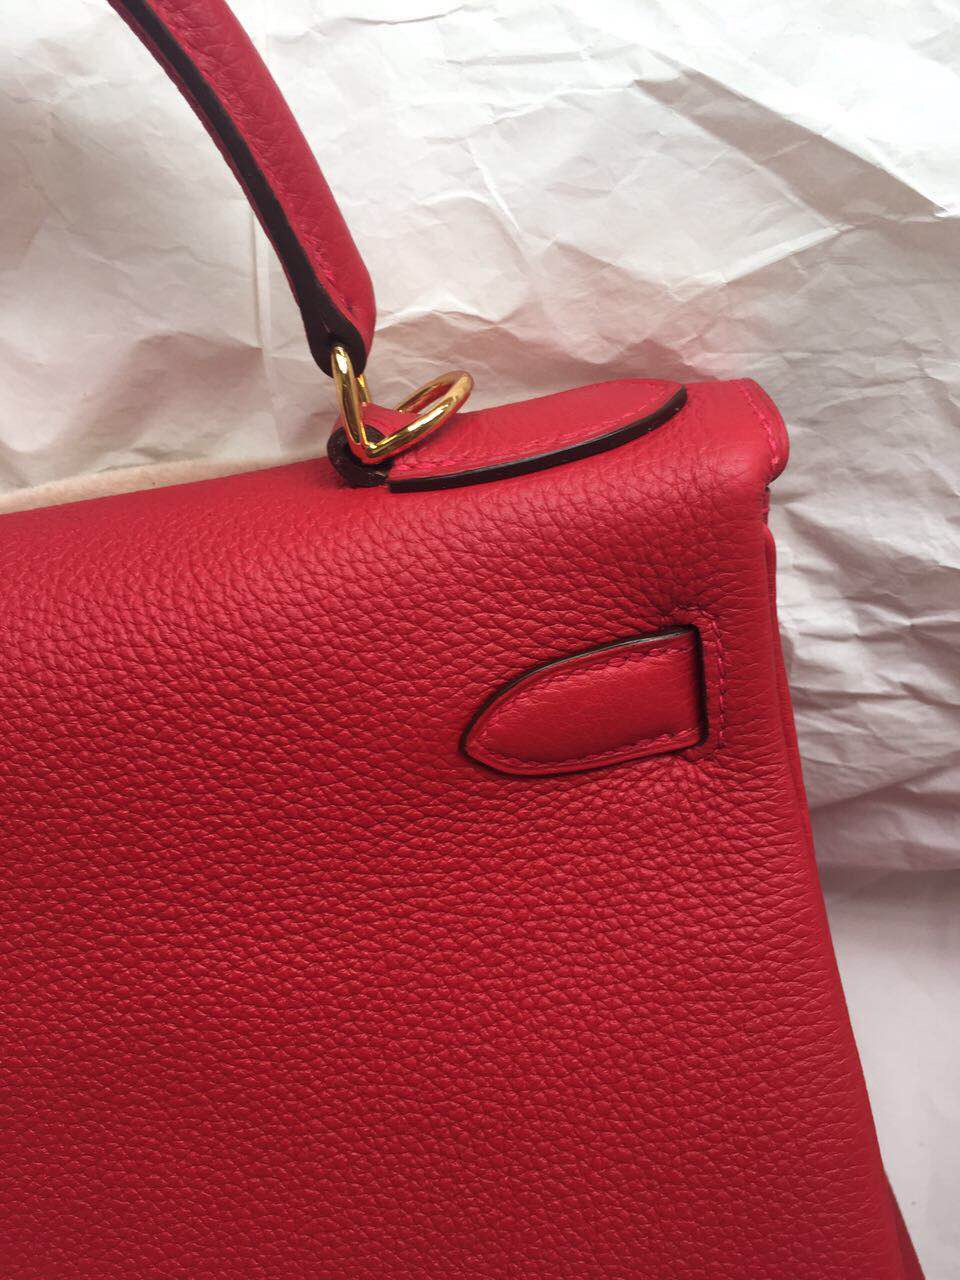 Hand Stitching Hermes Q5 Candy Red France Togo Leather Kelly Bag28cm Retourne Gold Hardware